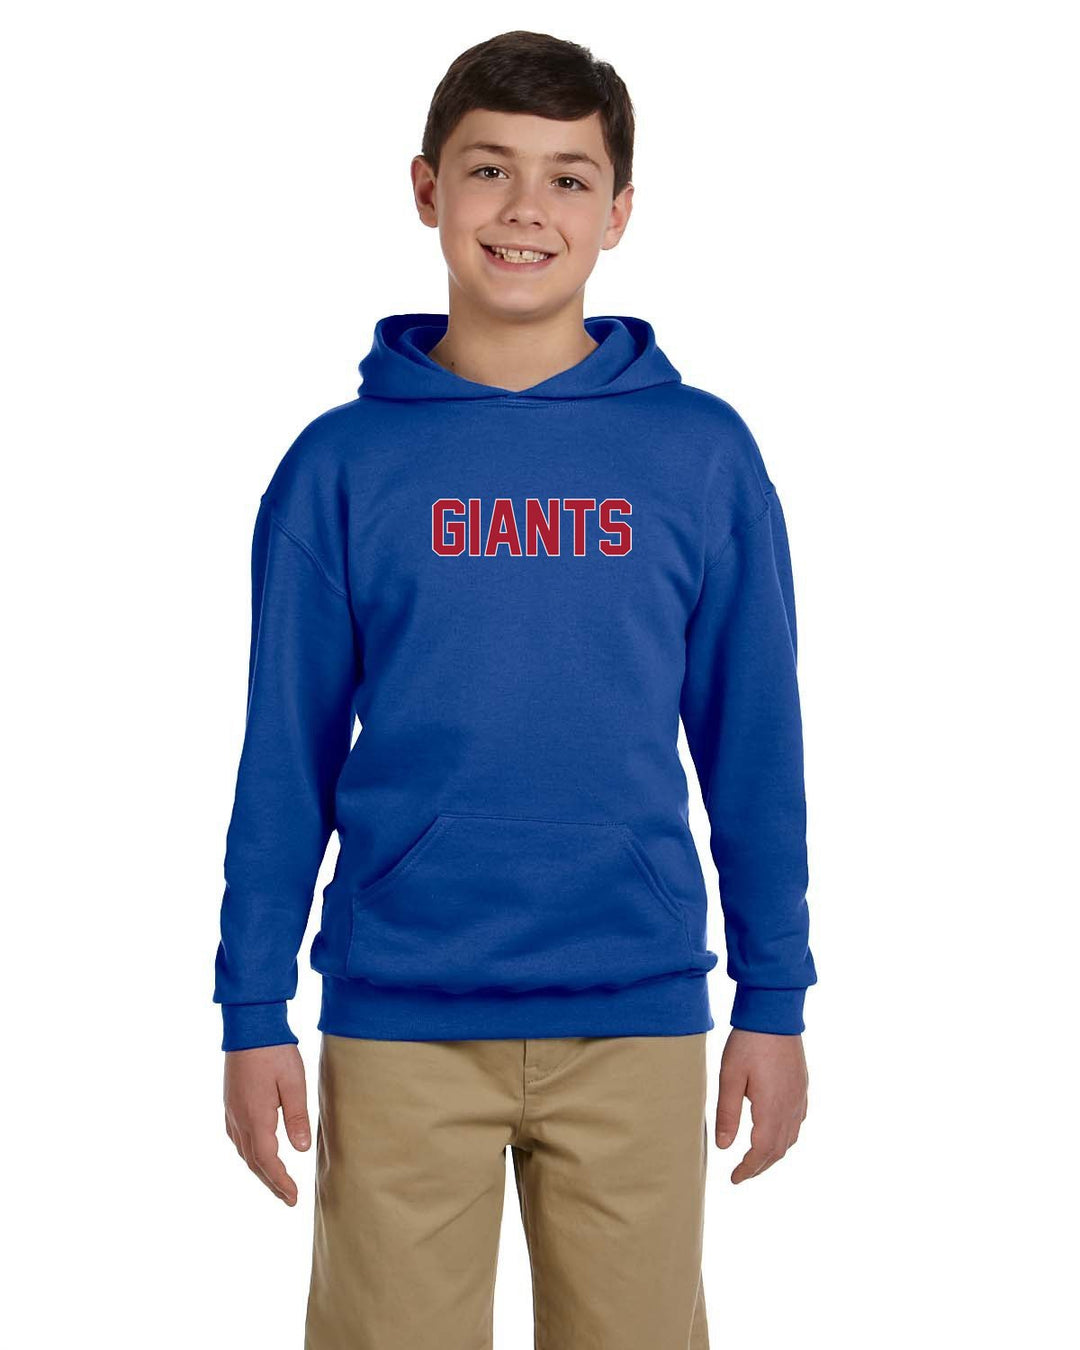 Flag Football Giants - Jerzees Youth 8 oz. NuBlend® Fleece Pullover Hooded Sweatshirt (996Y)